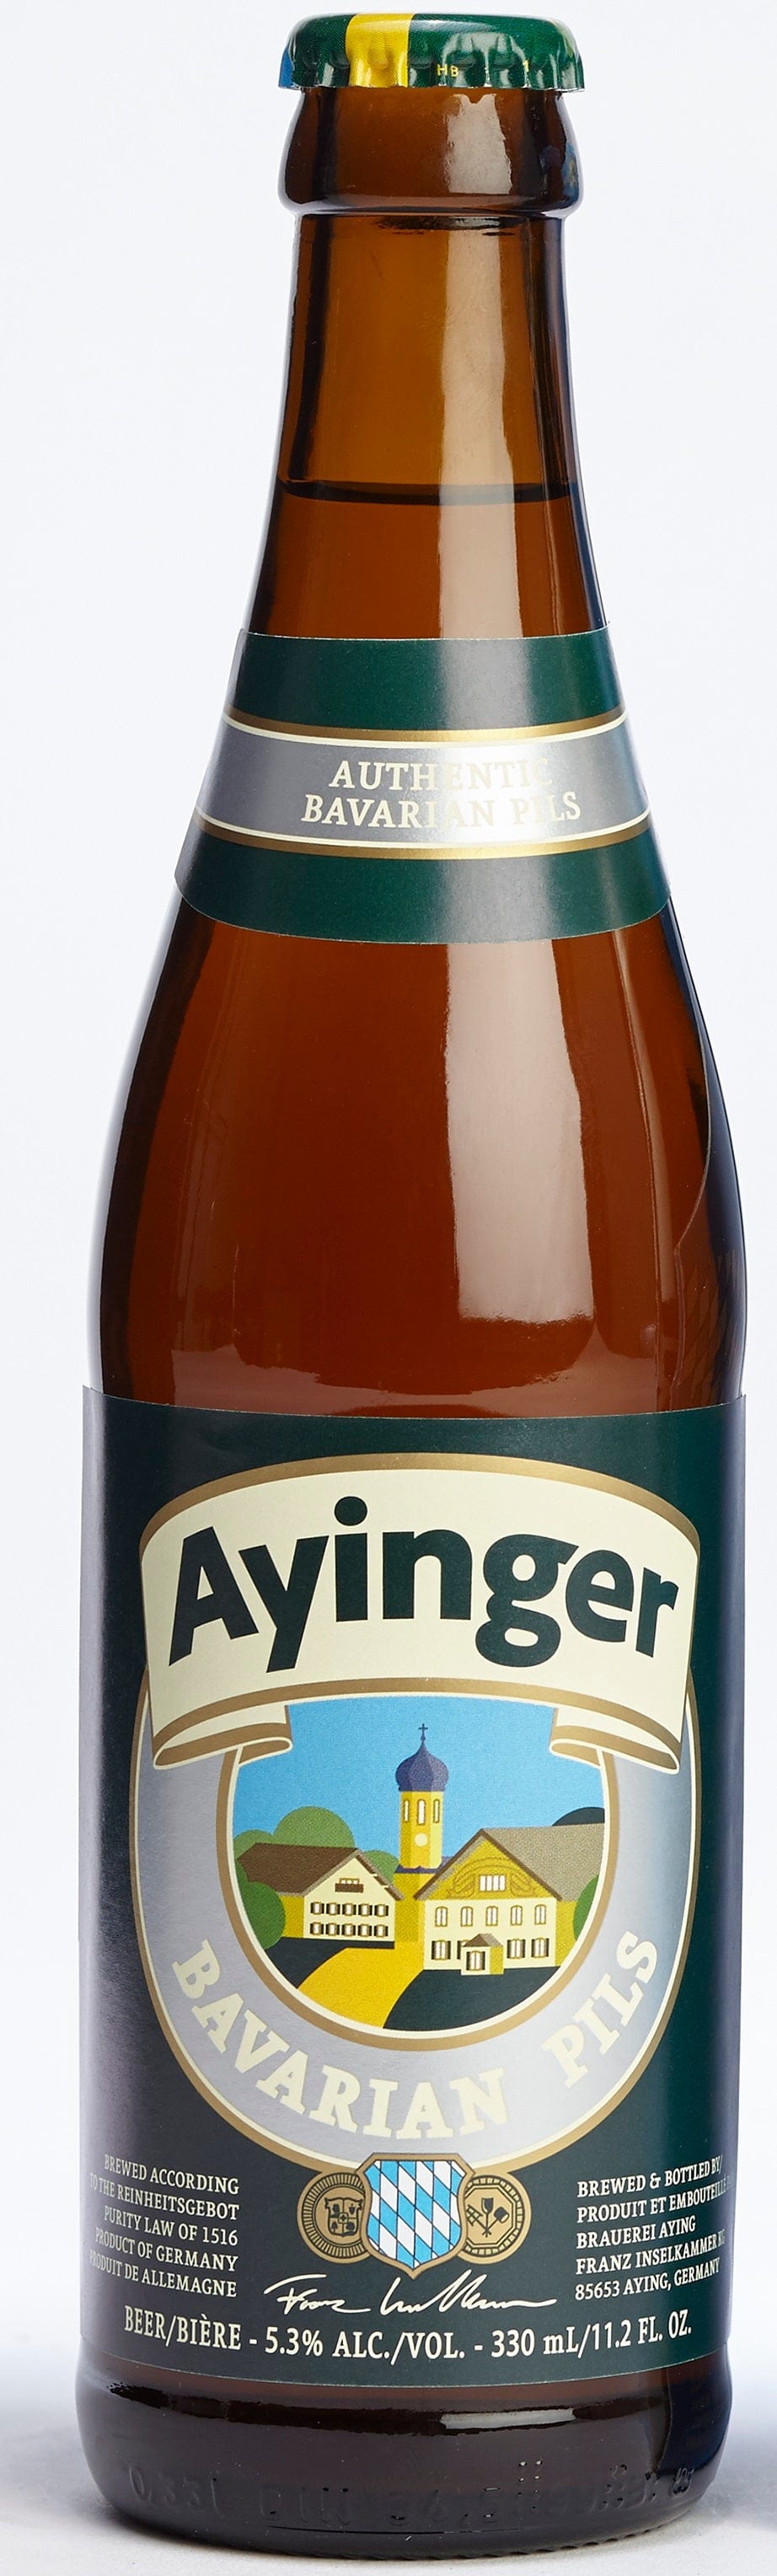 Beer Ayinger Bavarian Pils